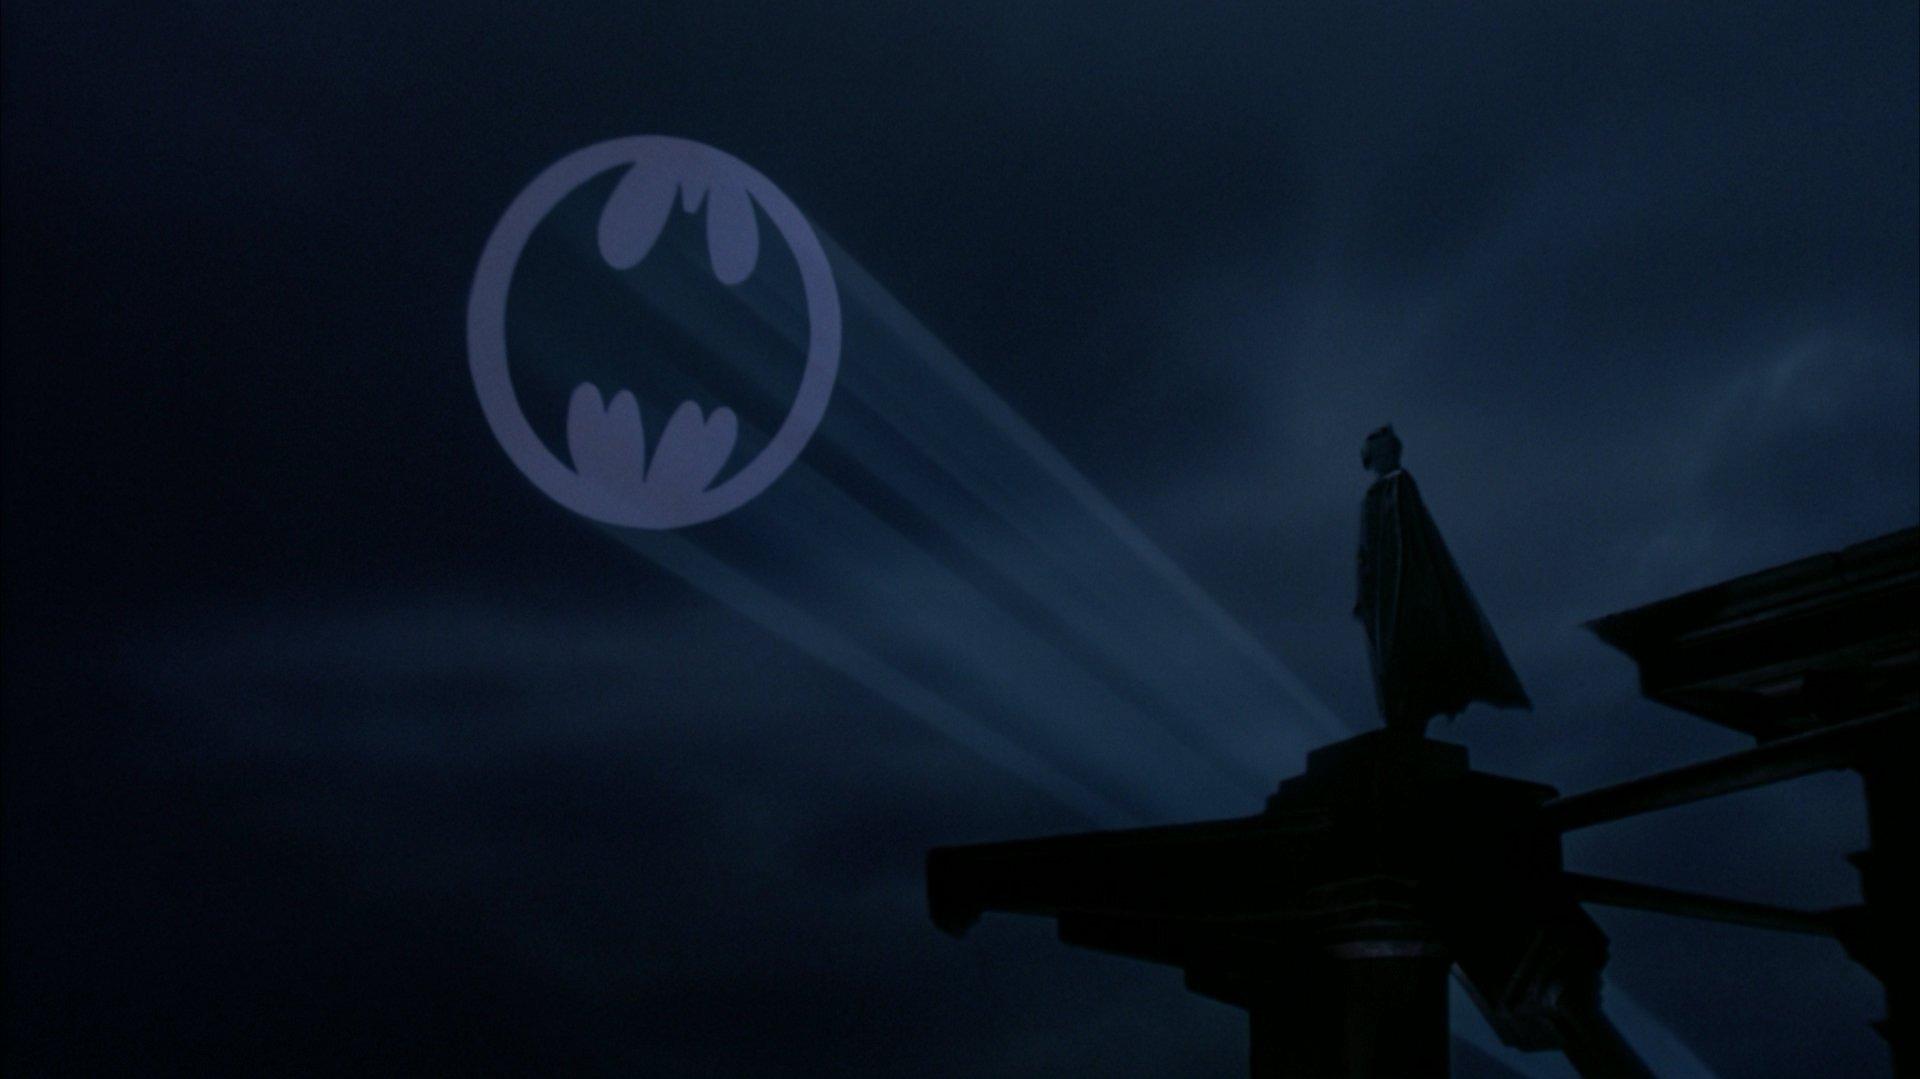 Call the Bat! Light up the Sky!